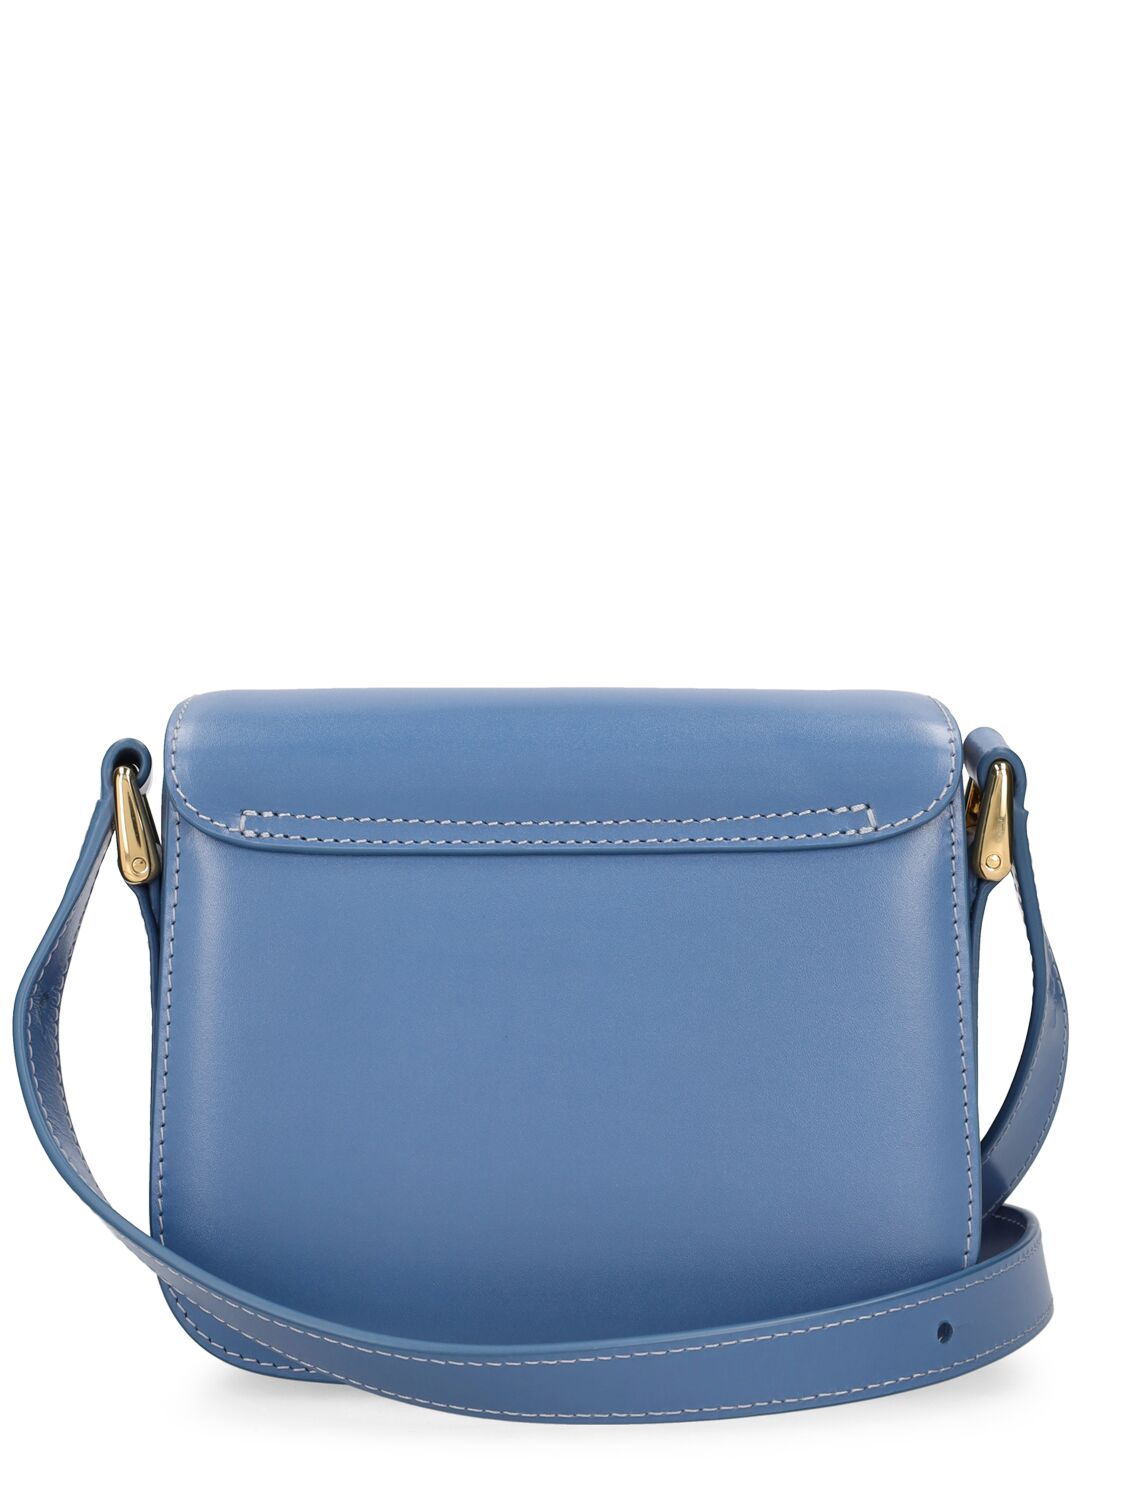 Shop Apc Mini Grace Smooth Leather Bag In Ocean Blue